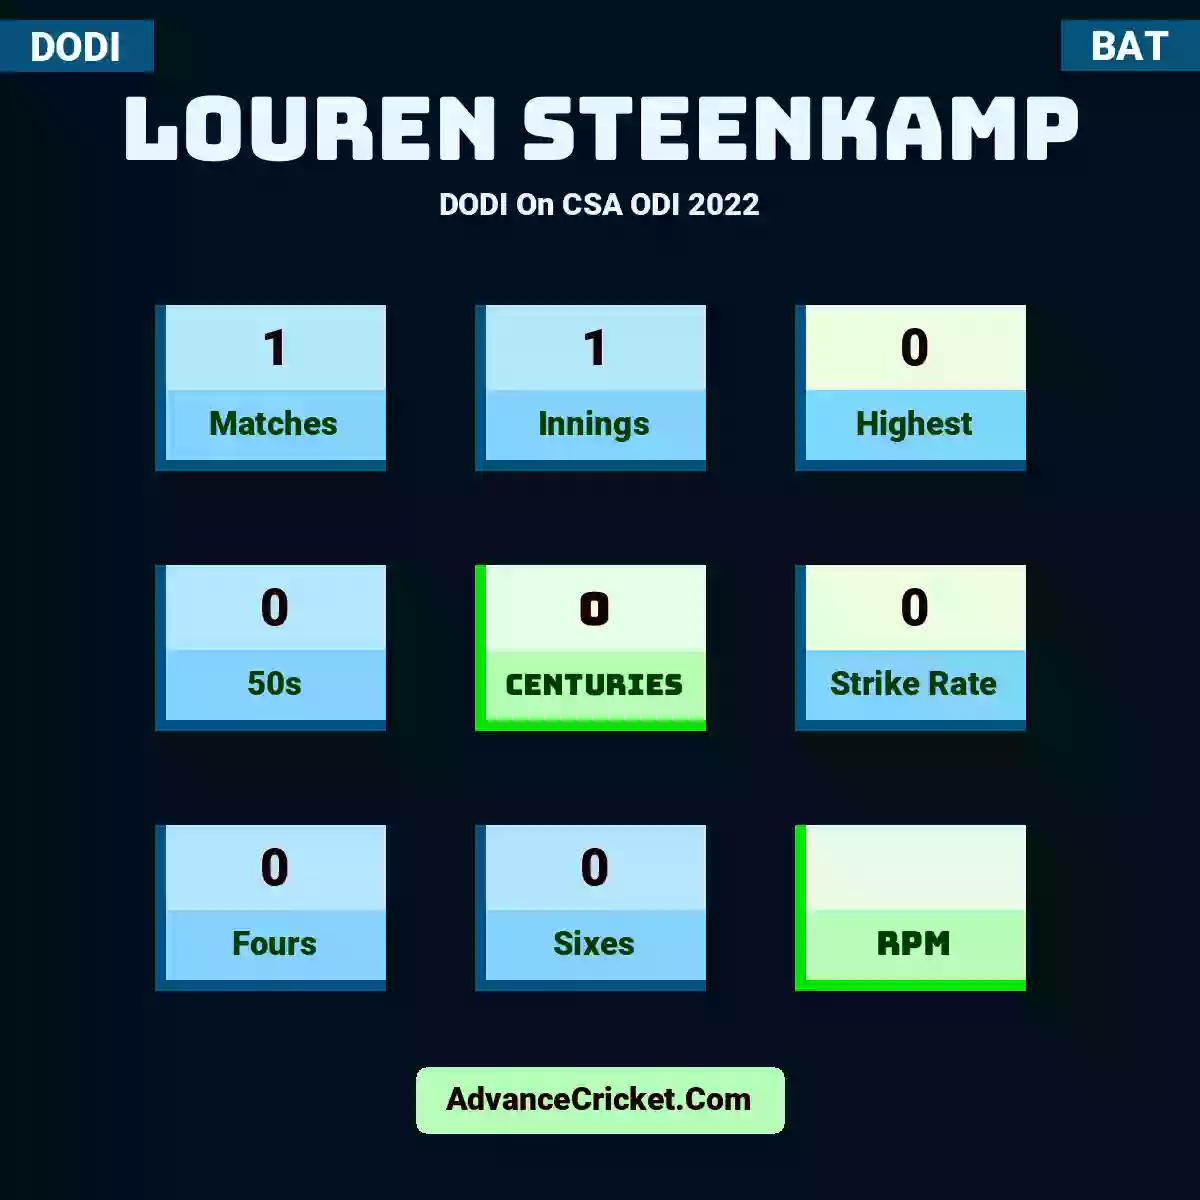 Louren Steenkamp DODI  On CSA ODI 2022, Louren Steenkamp played 1 matches, scored 0 runs as highest, 0 half-centuries, and 0 centuries, with a strike rate of 0. l.steenkamp hit 0 fours and 0 sixes.